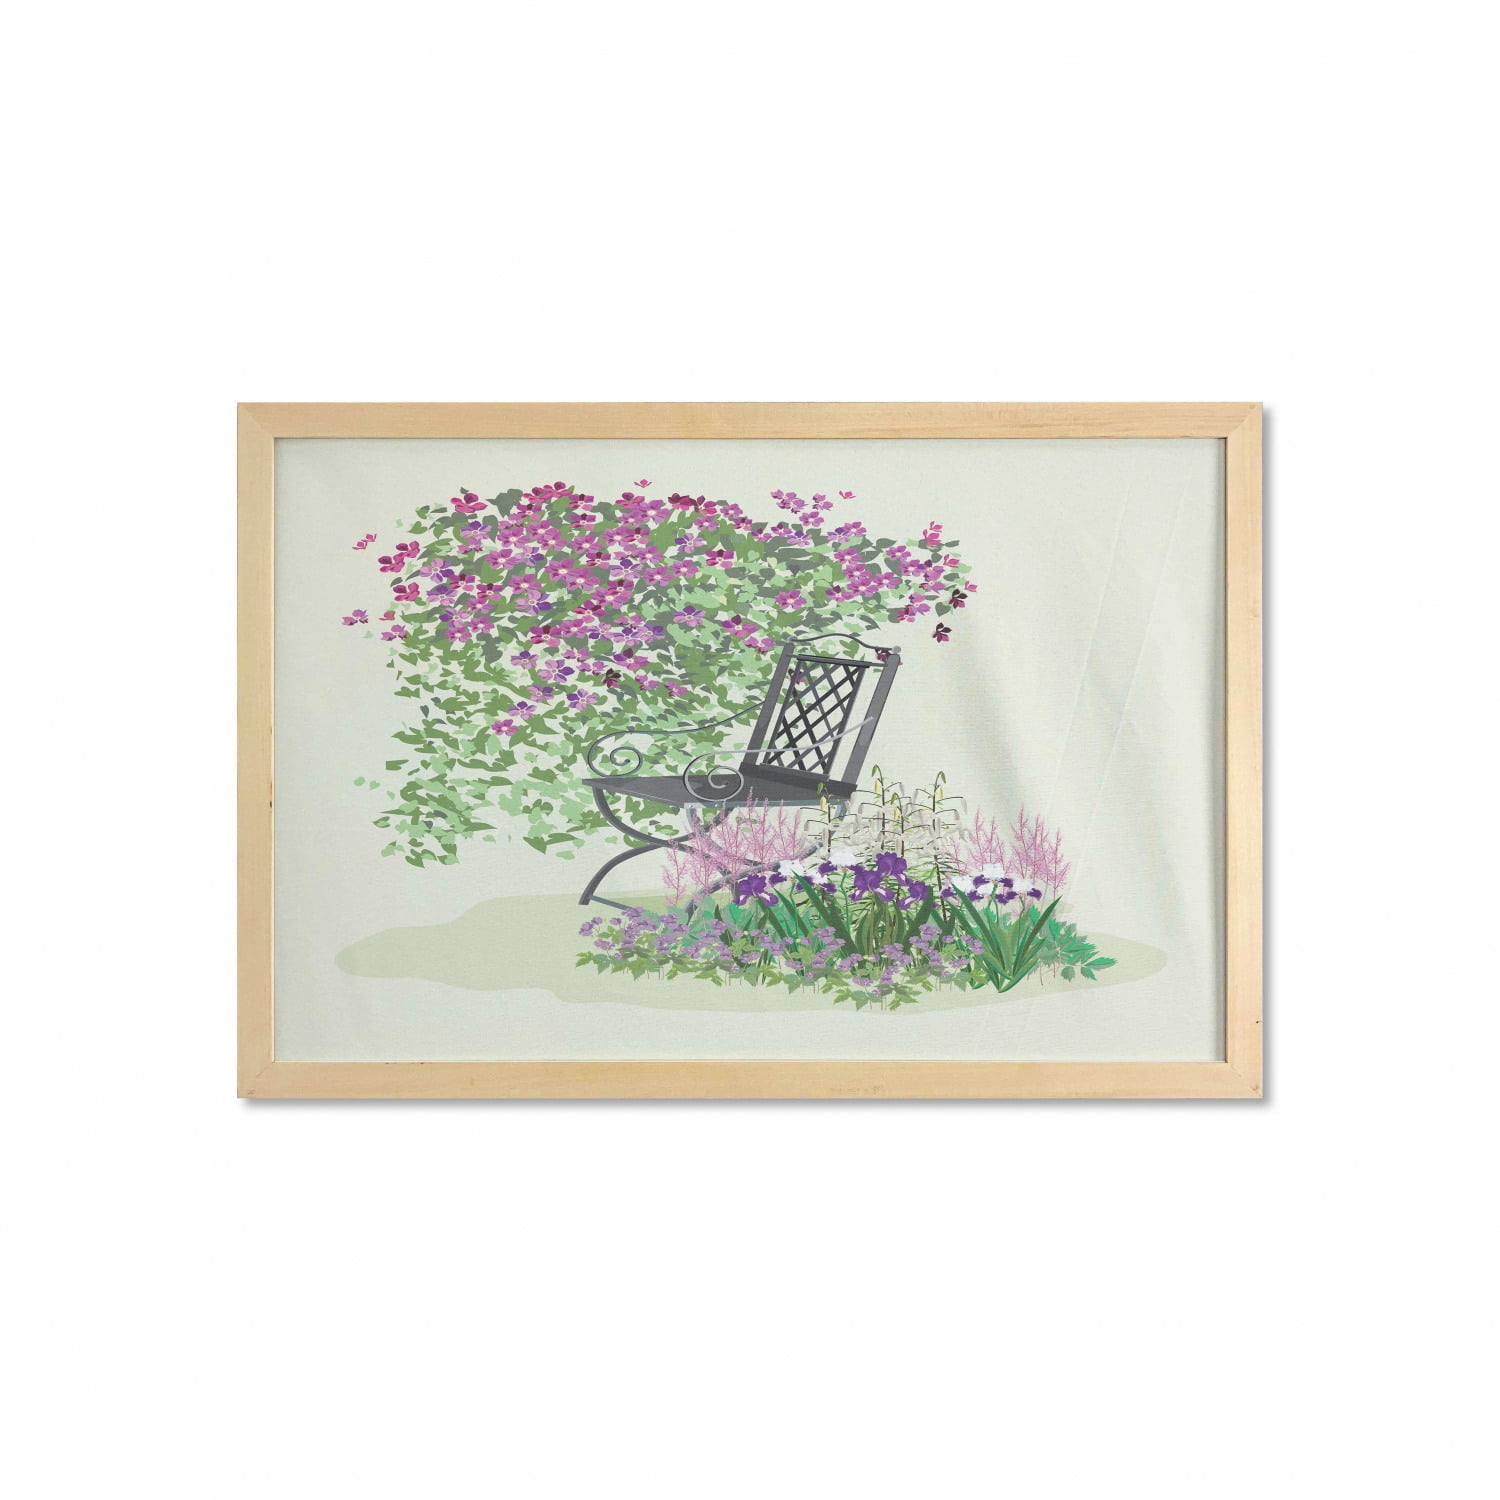 Herb Art Print Lavender Framed poster 12x16 Living Room Wall Decor Housewarming Gift